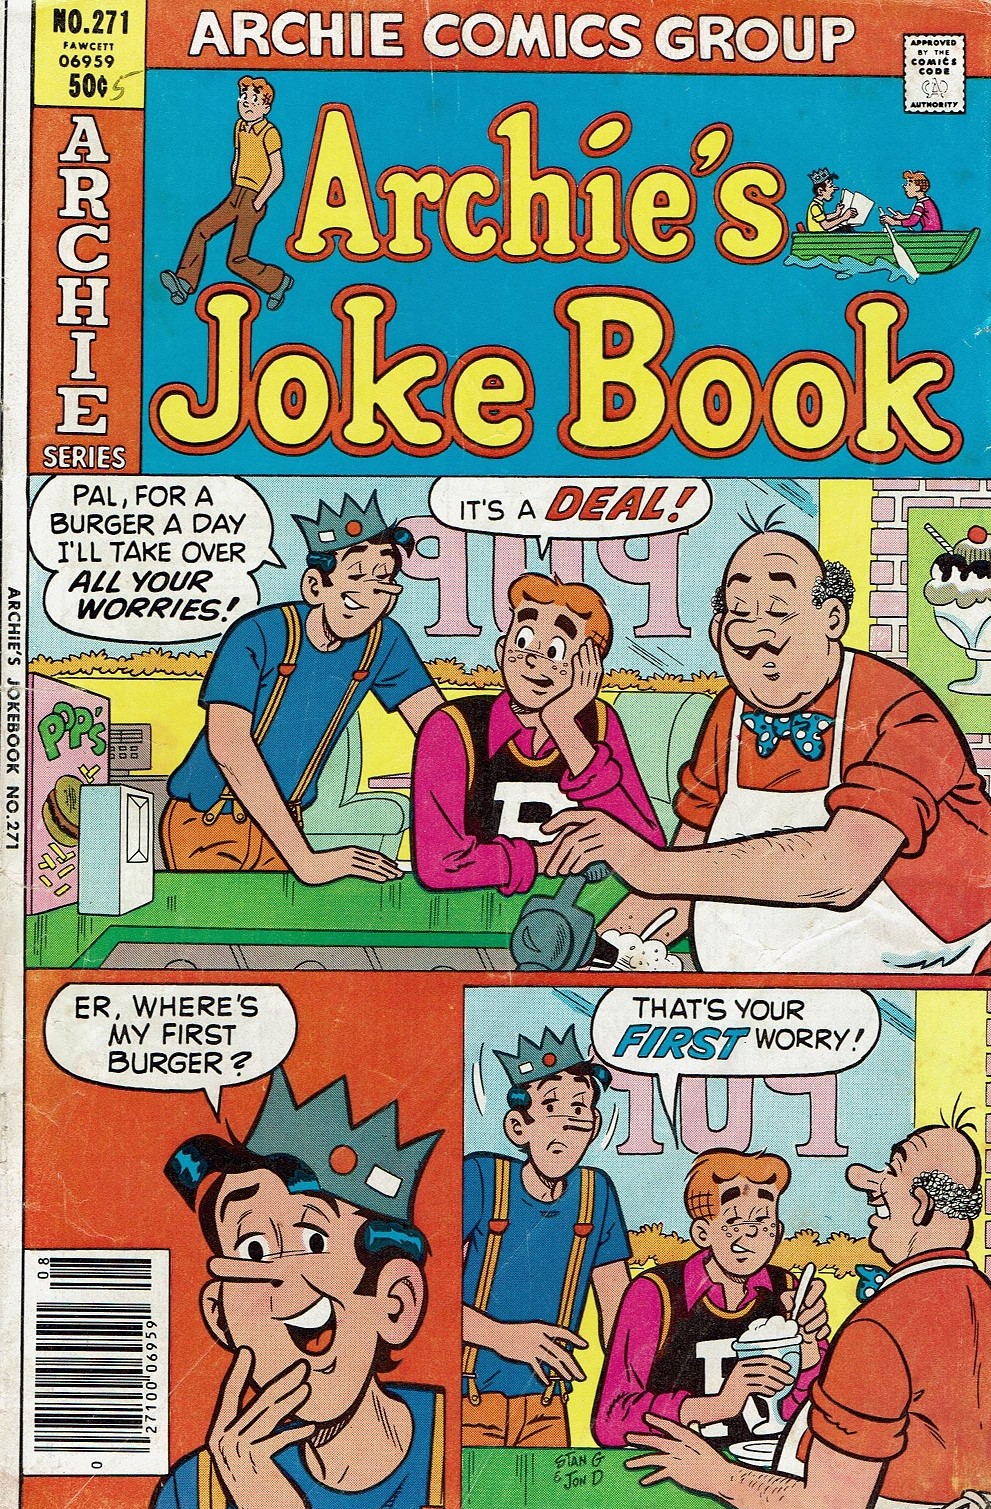 Archie's Joke Book Magazine issue 271 - Page 1